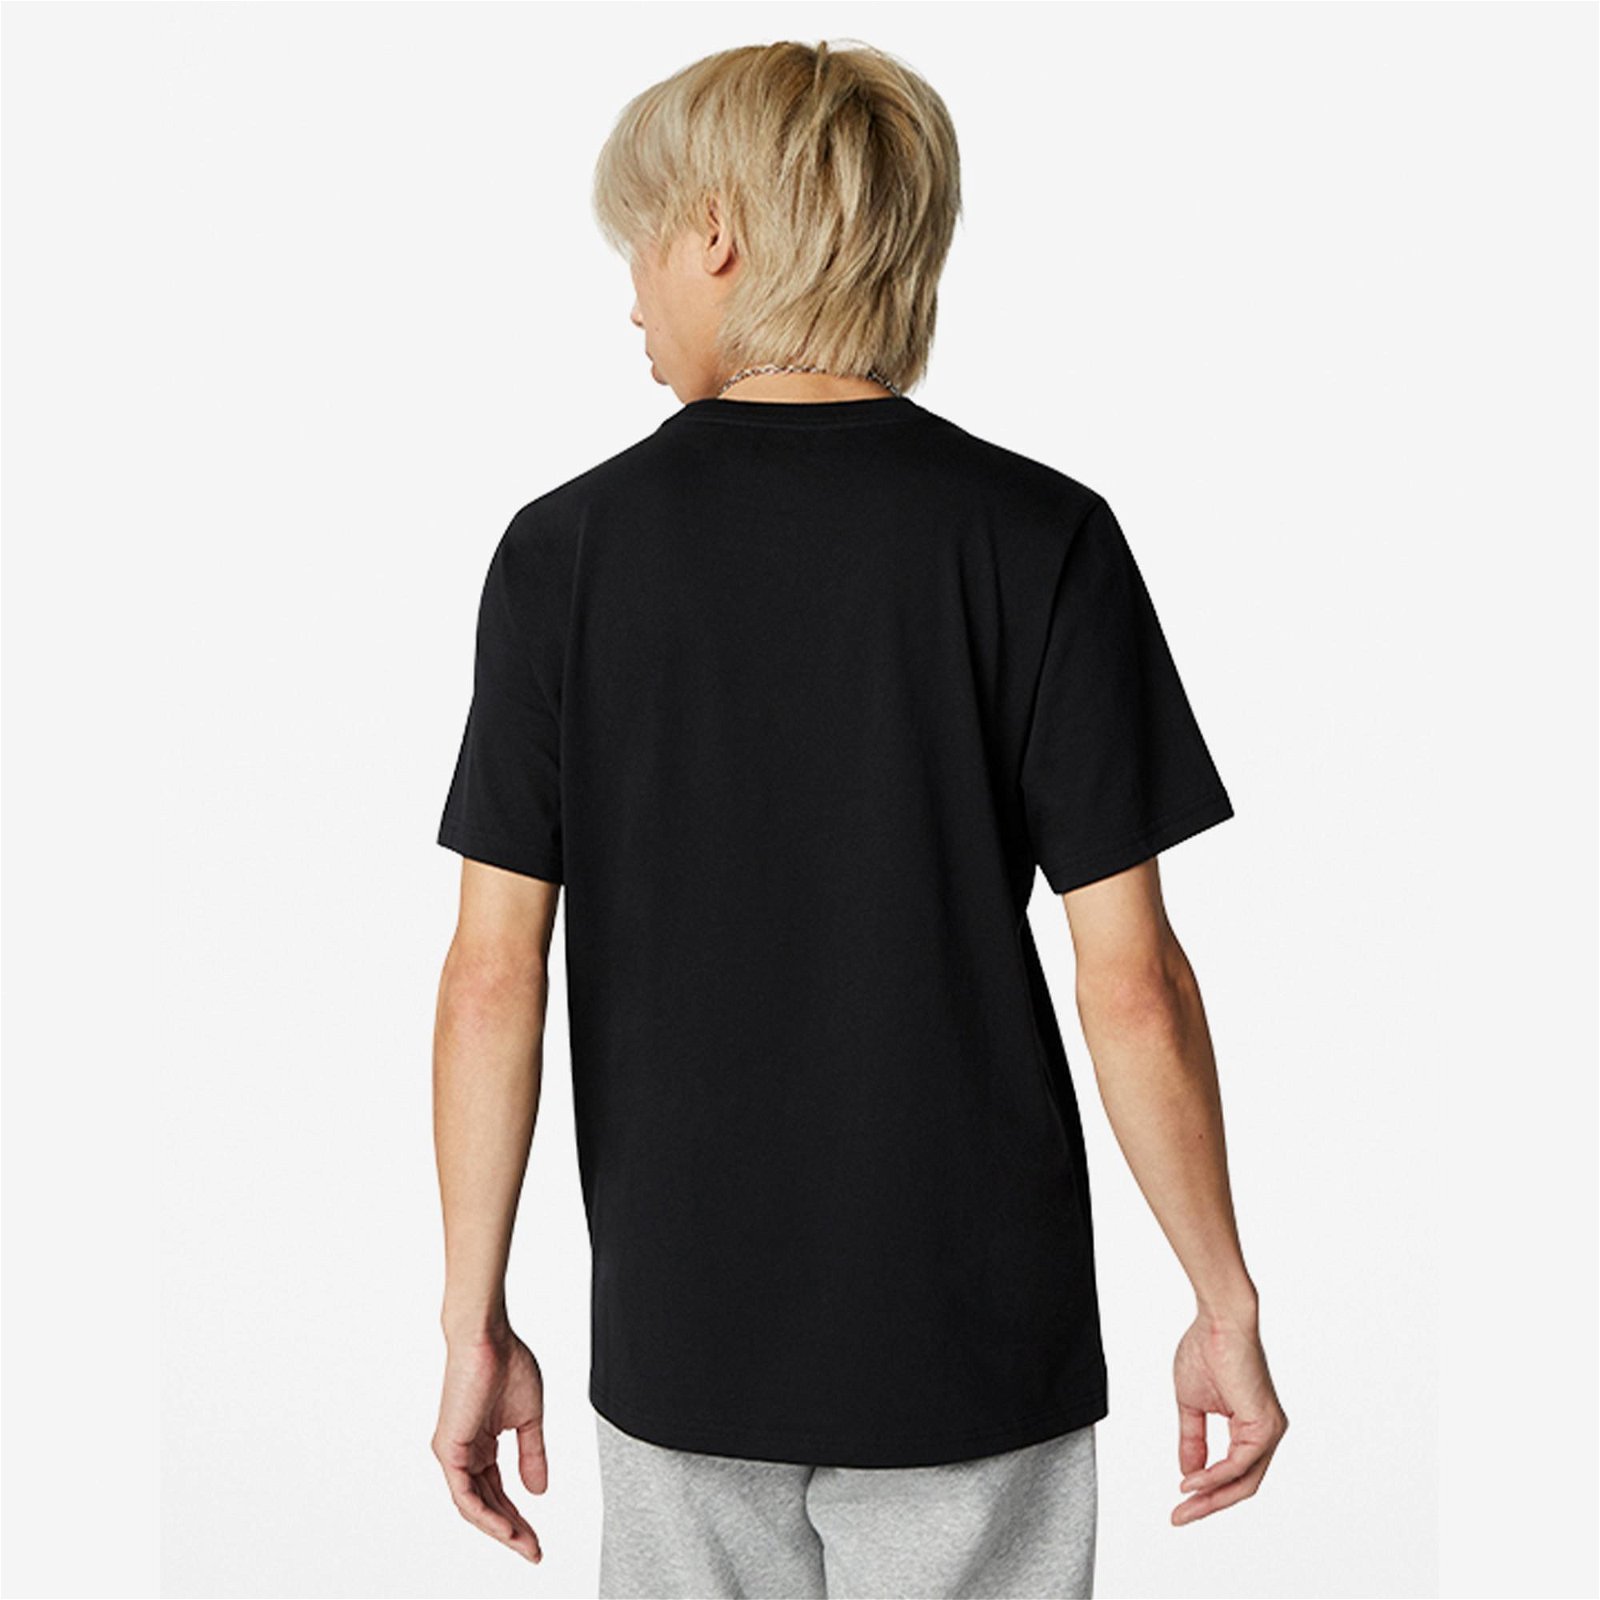 Converse Go-To Star Chevron Unisex Siyah T-Shirt